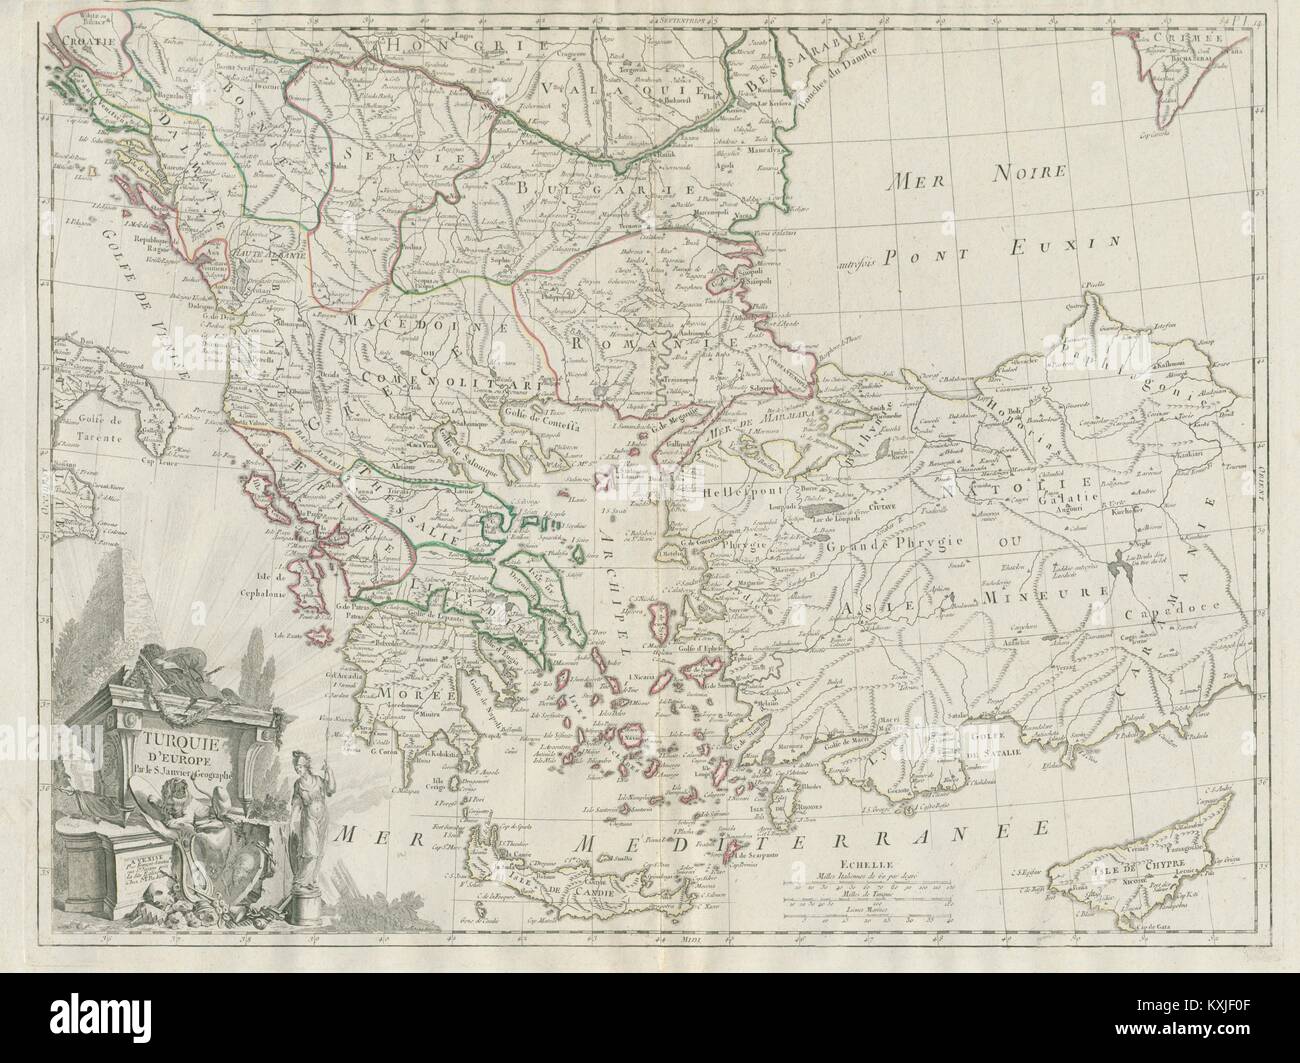 'Turquie d'Europe'. Greece Balkans Anatolia. SANTINI / JANVIER 1784 old map Stock Photo